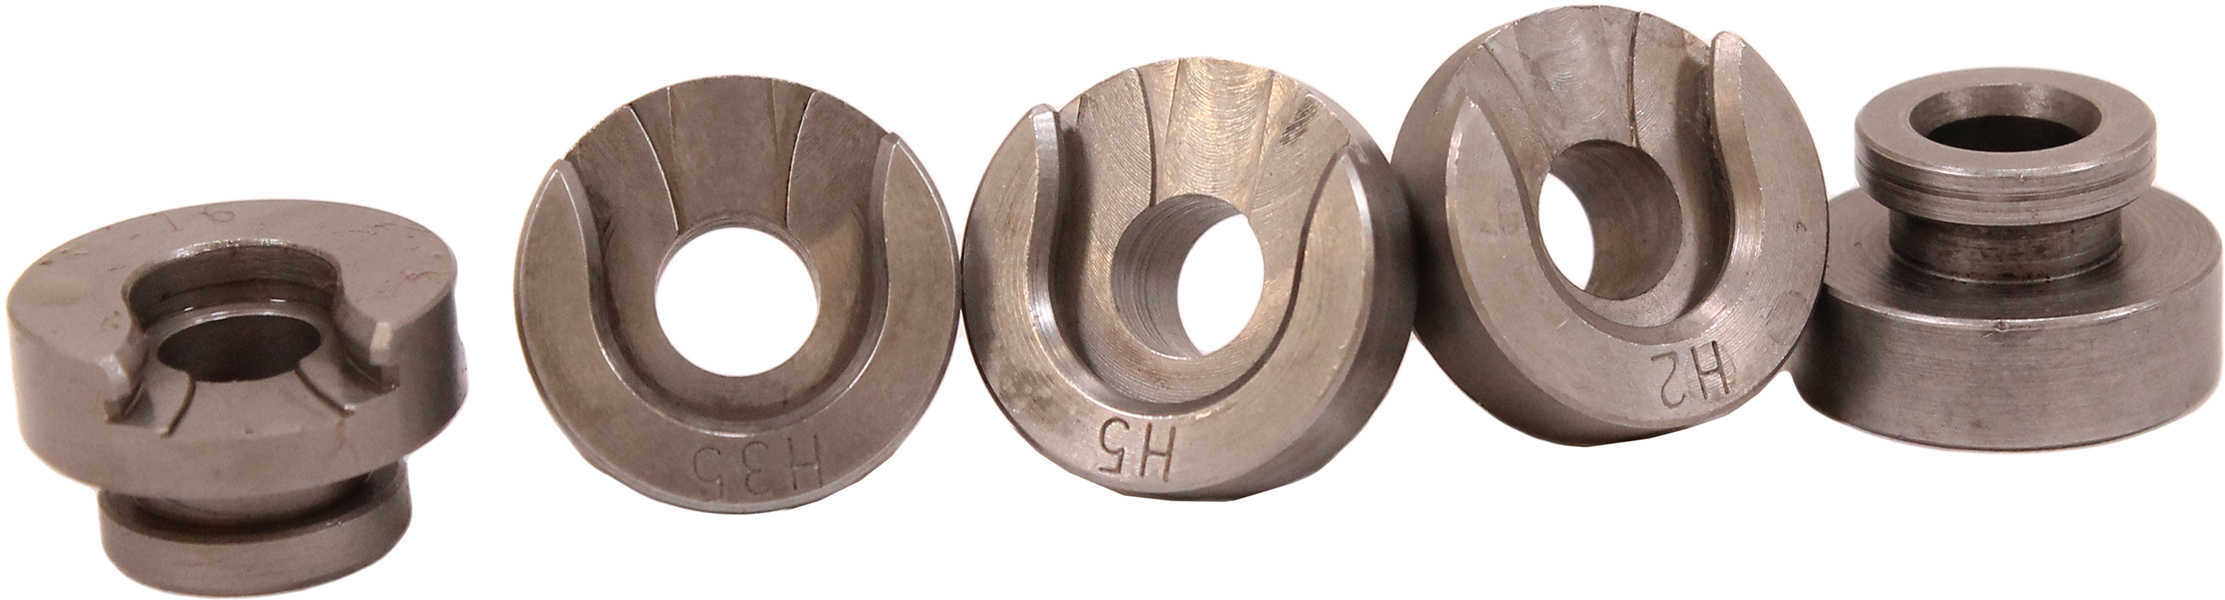 Hornady 390540 Lock-N-Load Shellholder Kit Multi-Caliber Size #1, 2, 5, 16, 35 Steel